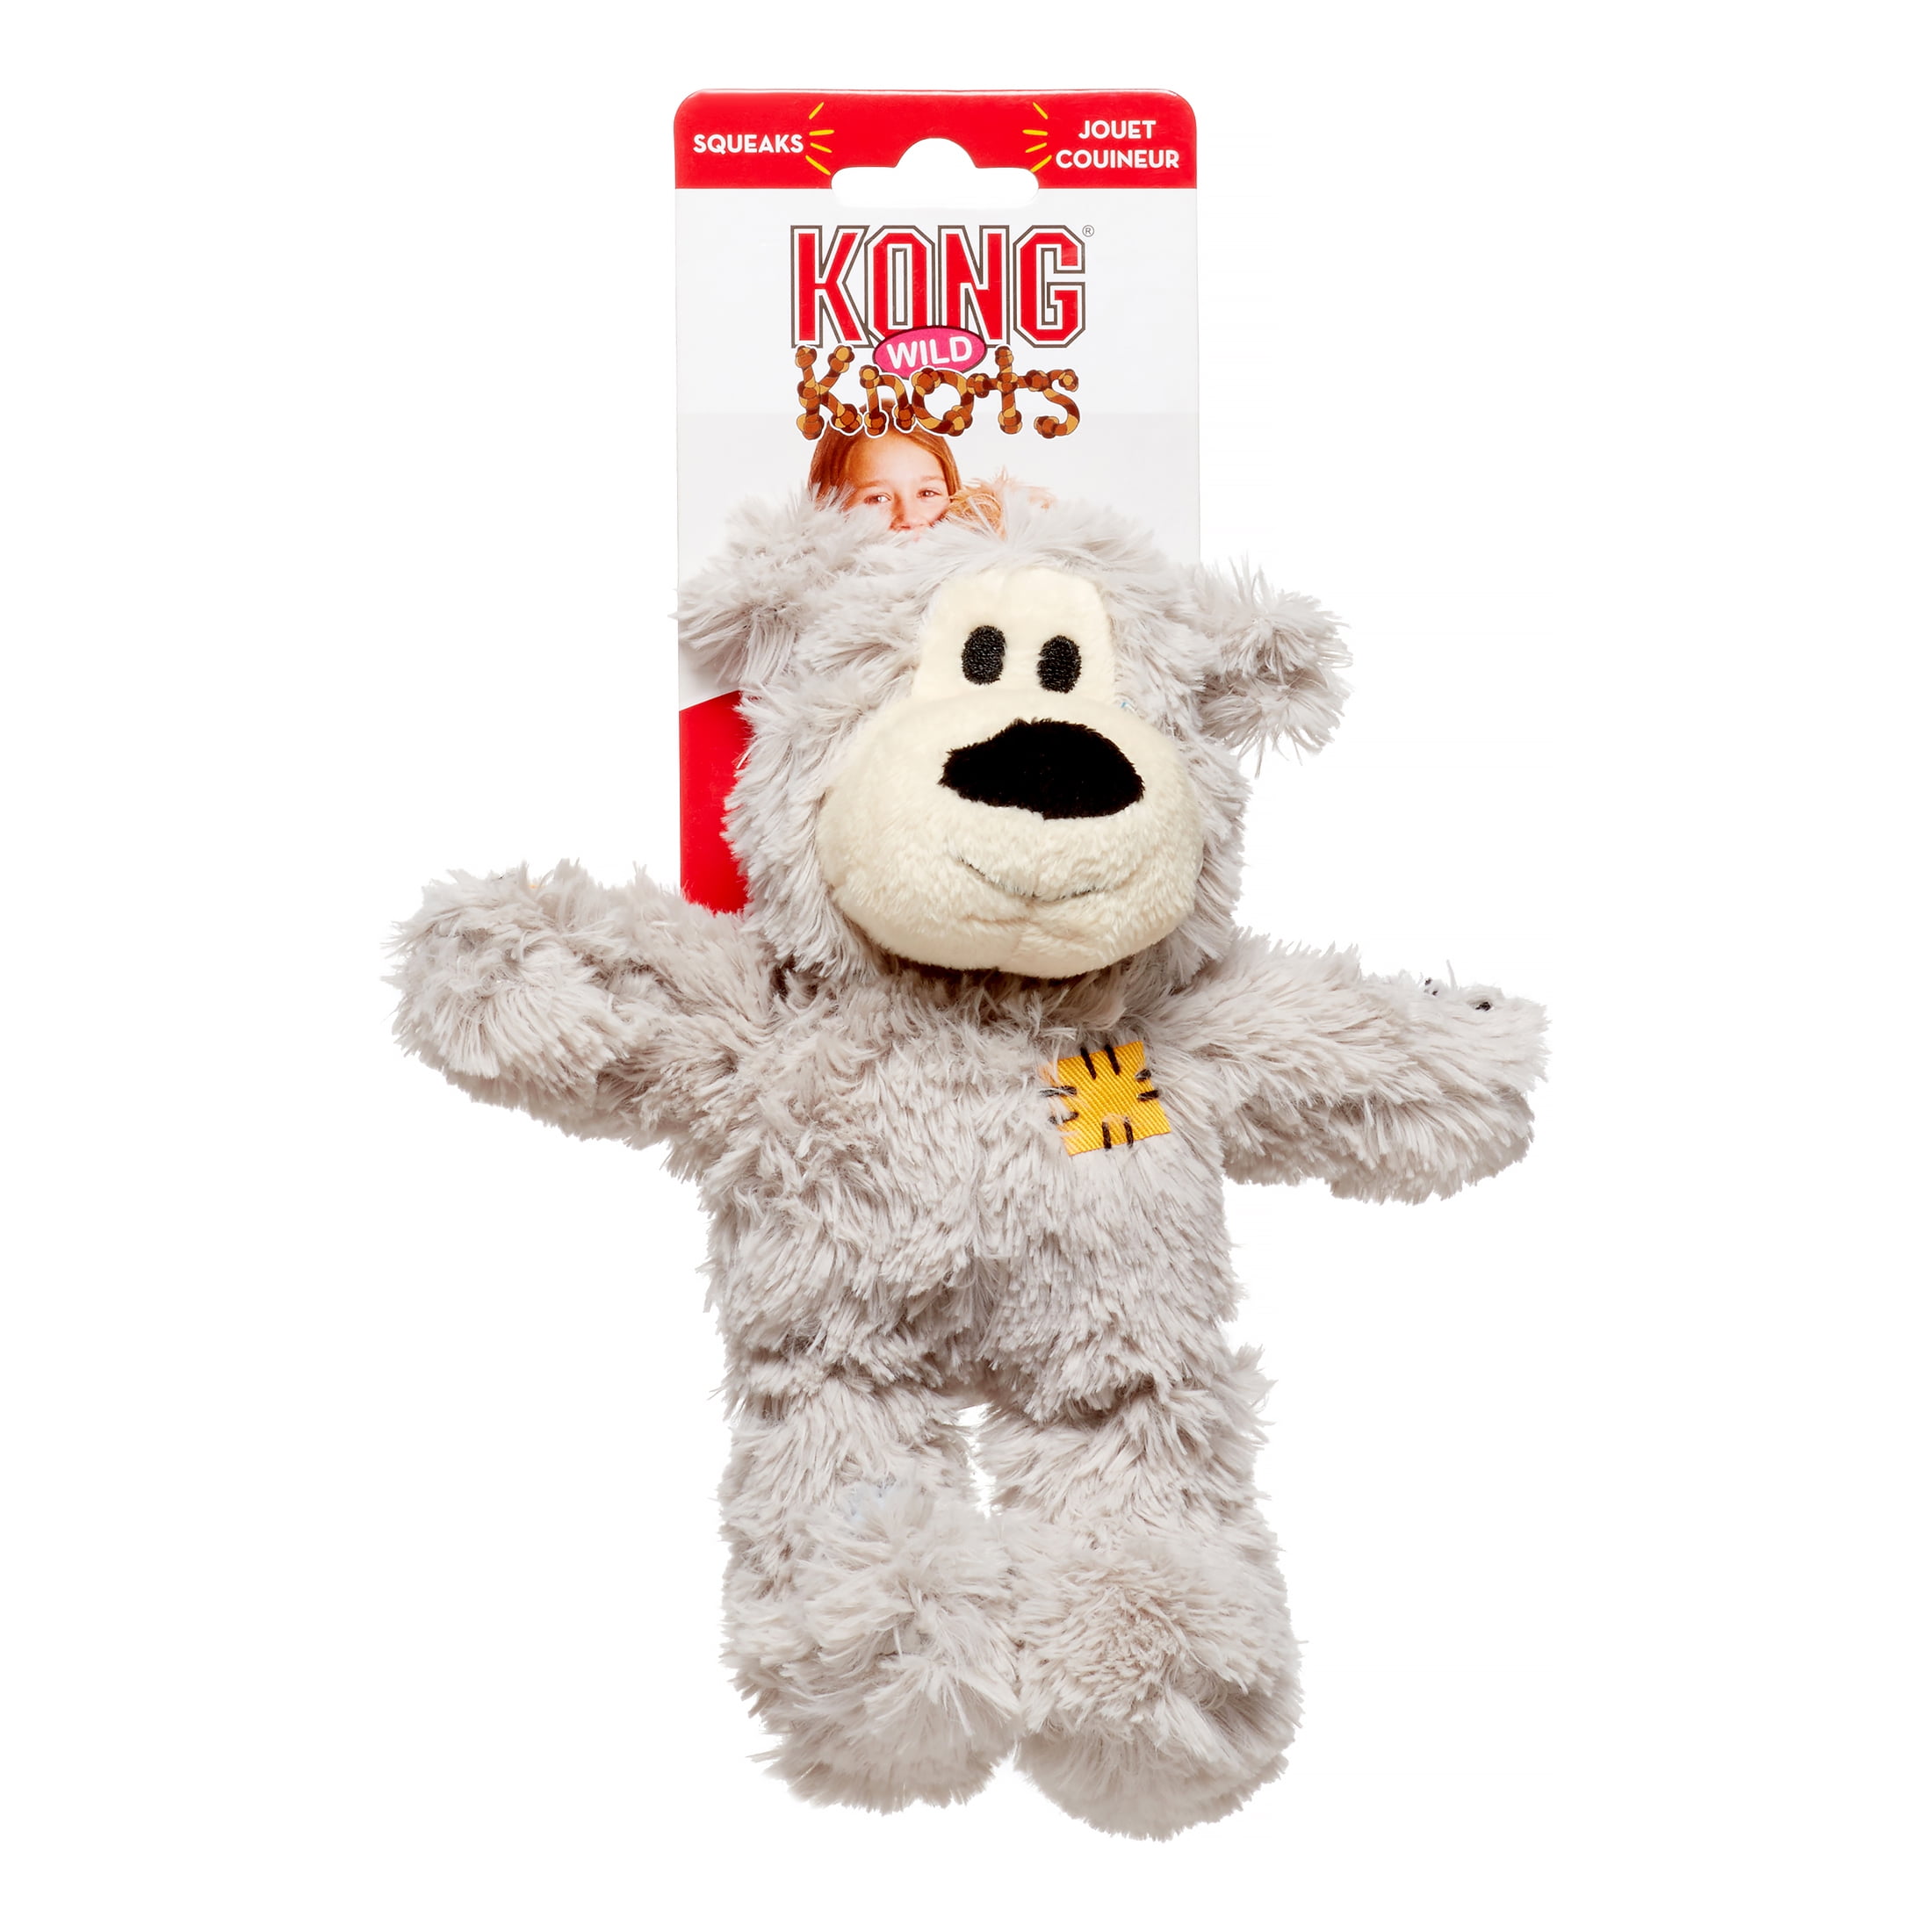 KONG Wild Knots Bear, Small/Medium